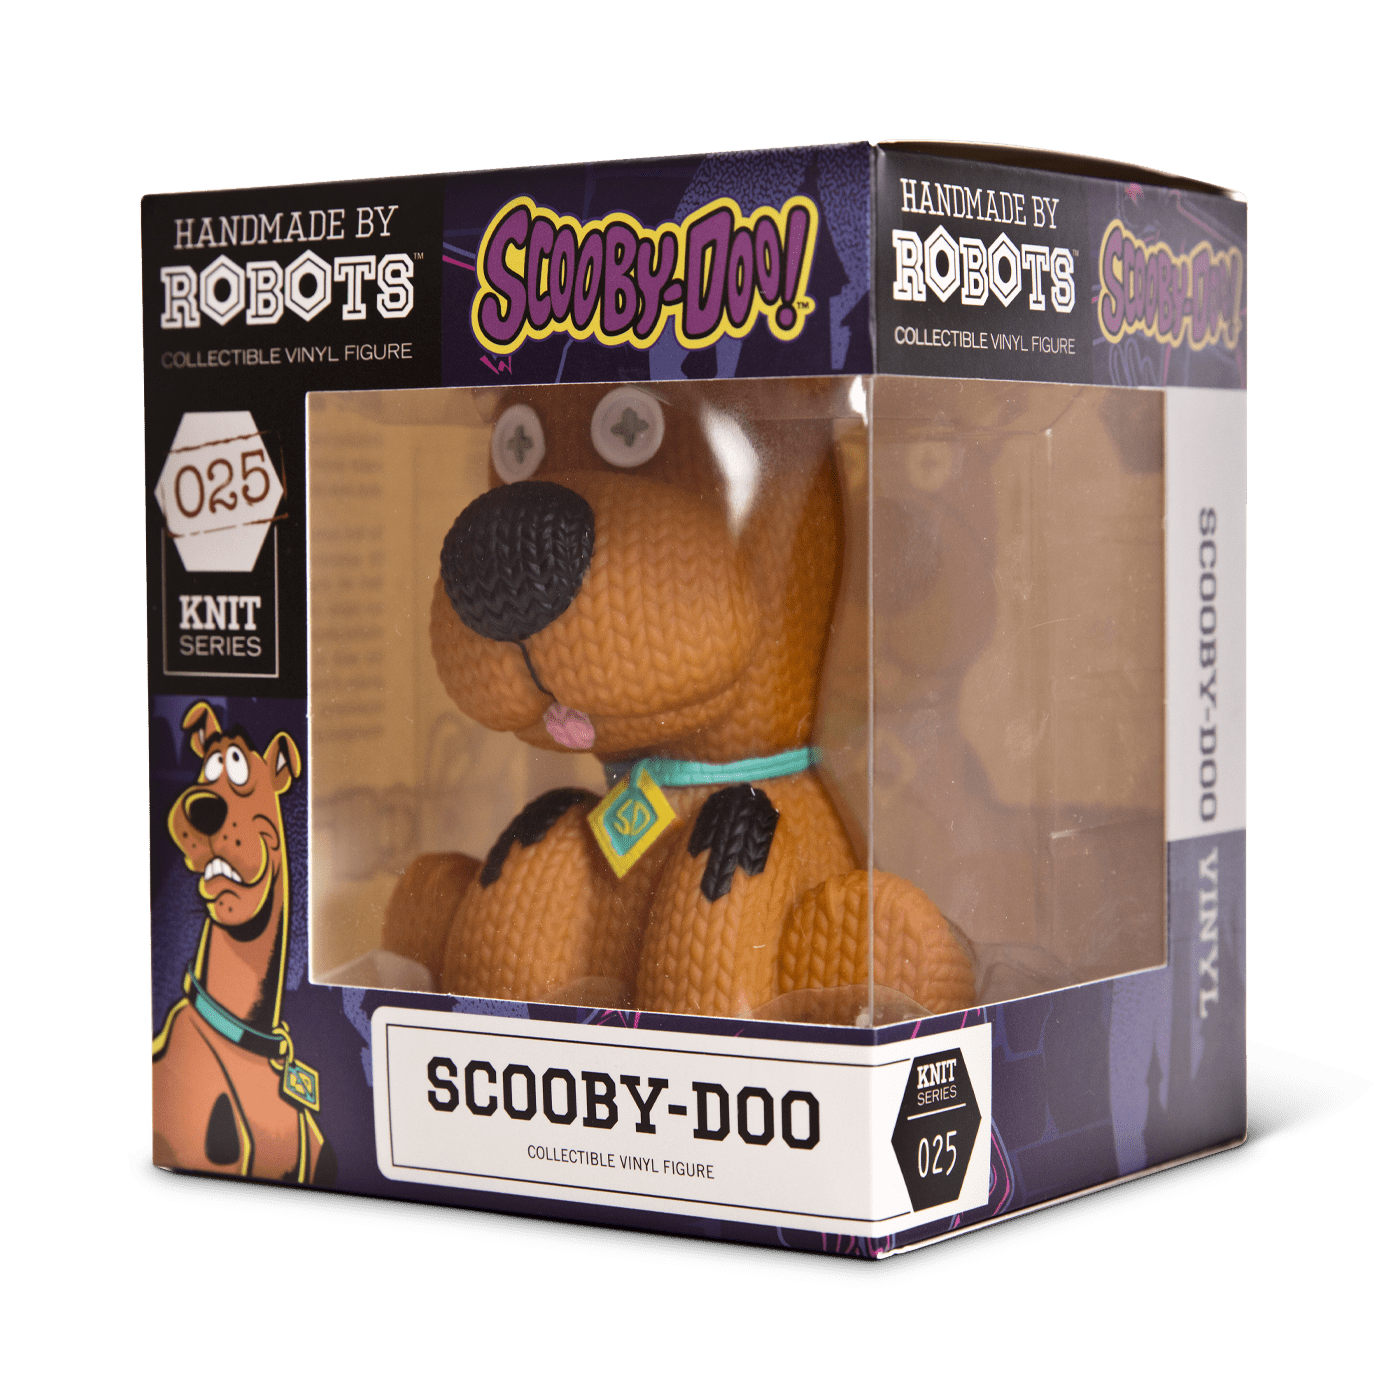 Scooby-Doo #025 - Scooby-Doo - Handmade by Robots